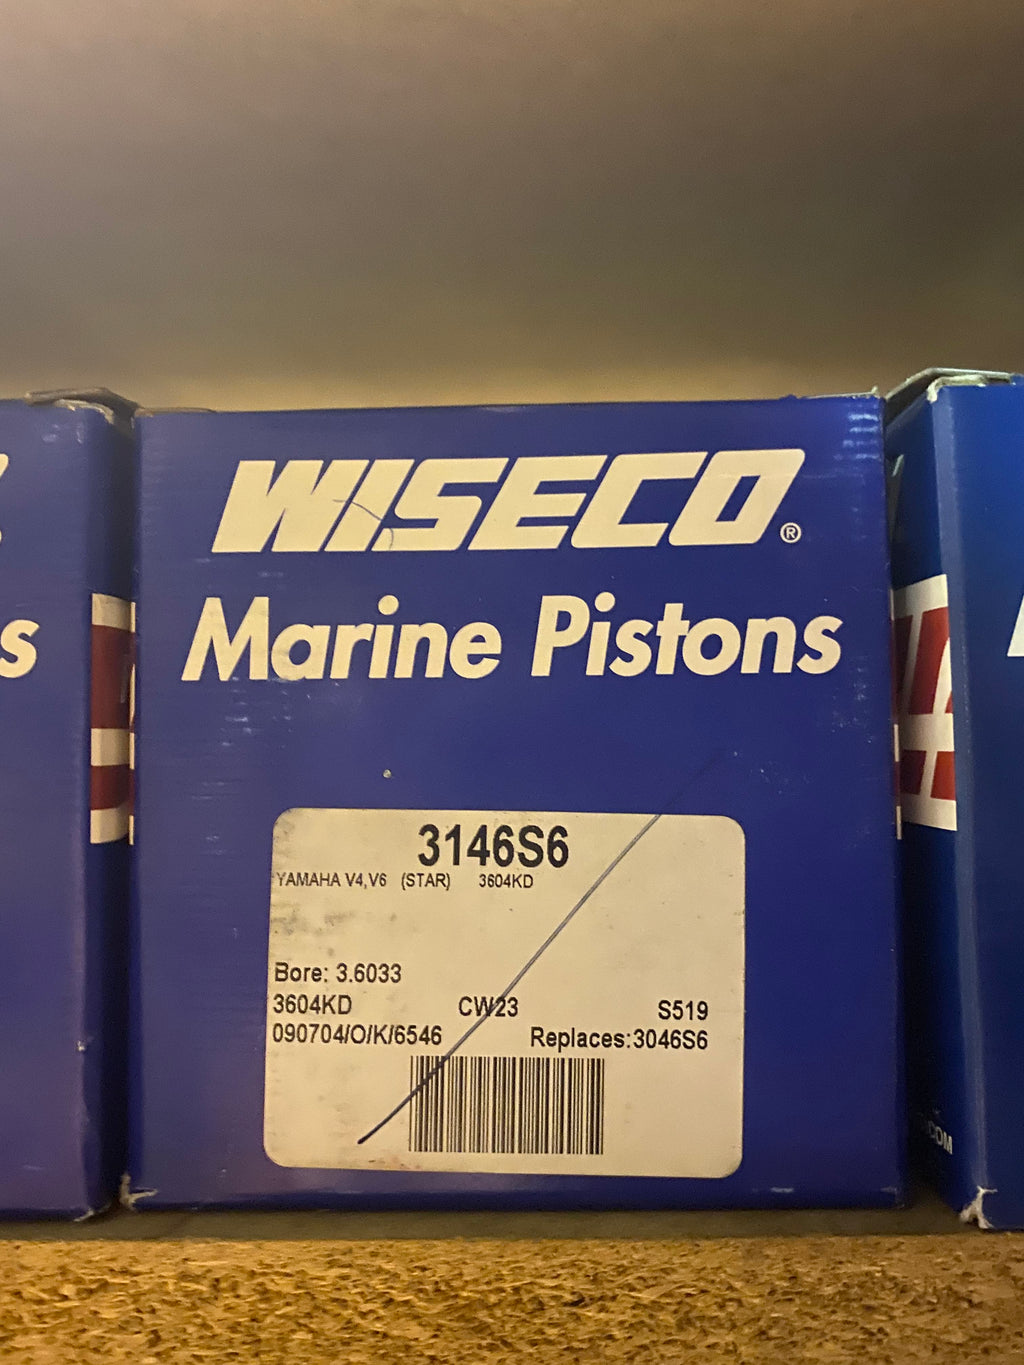 Wiseco Marine Piston Kit 3146S6 Yamaha V4, V6(STAR) 3604KD